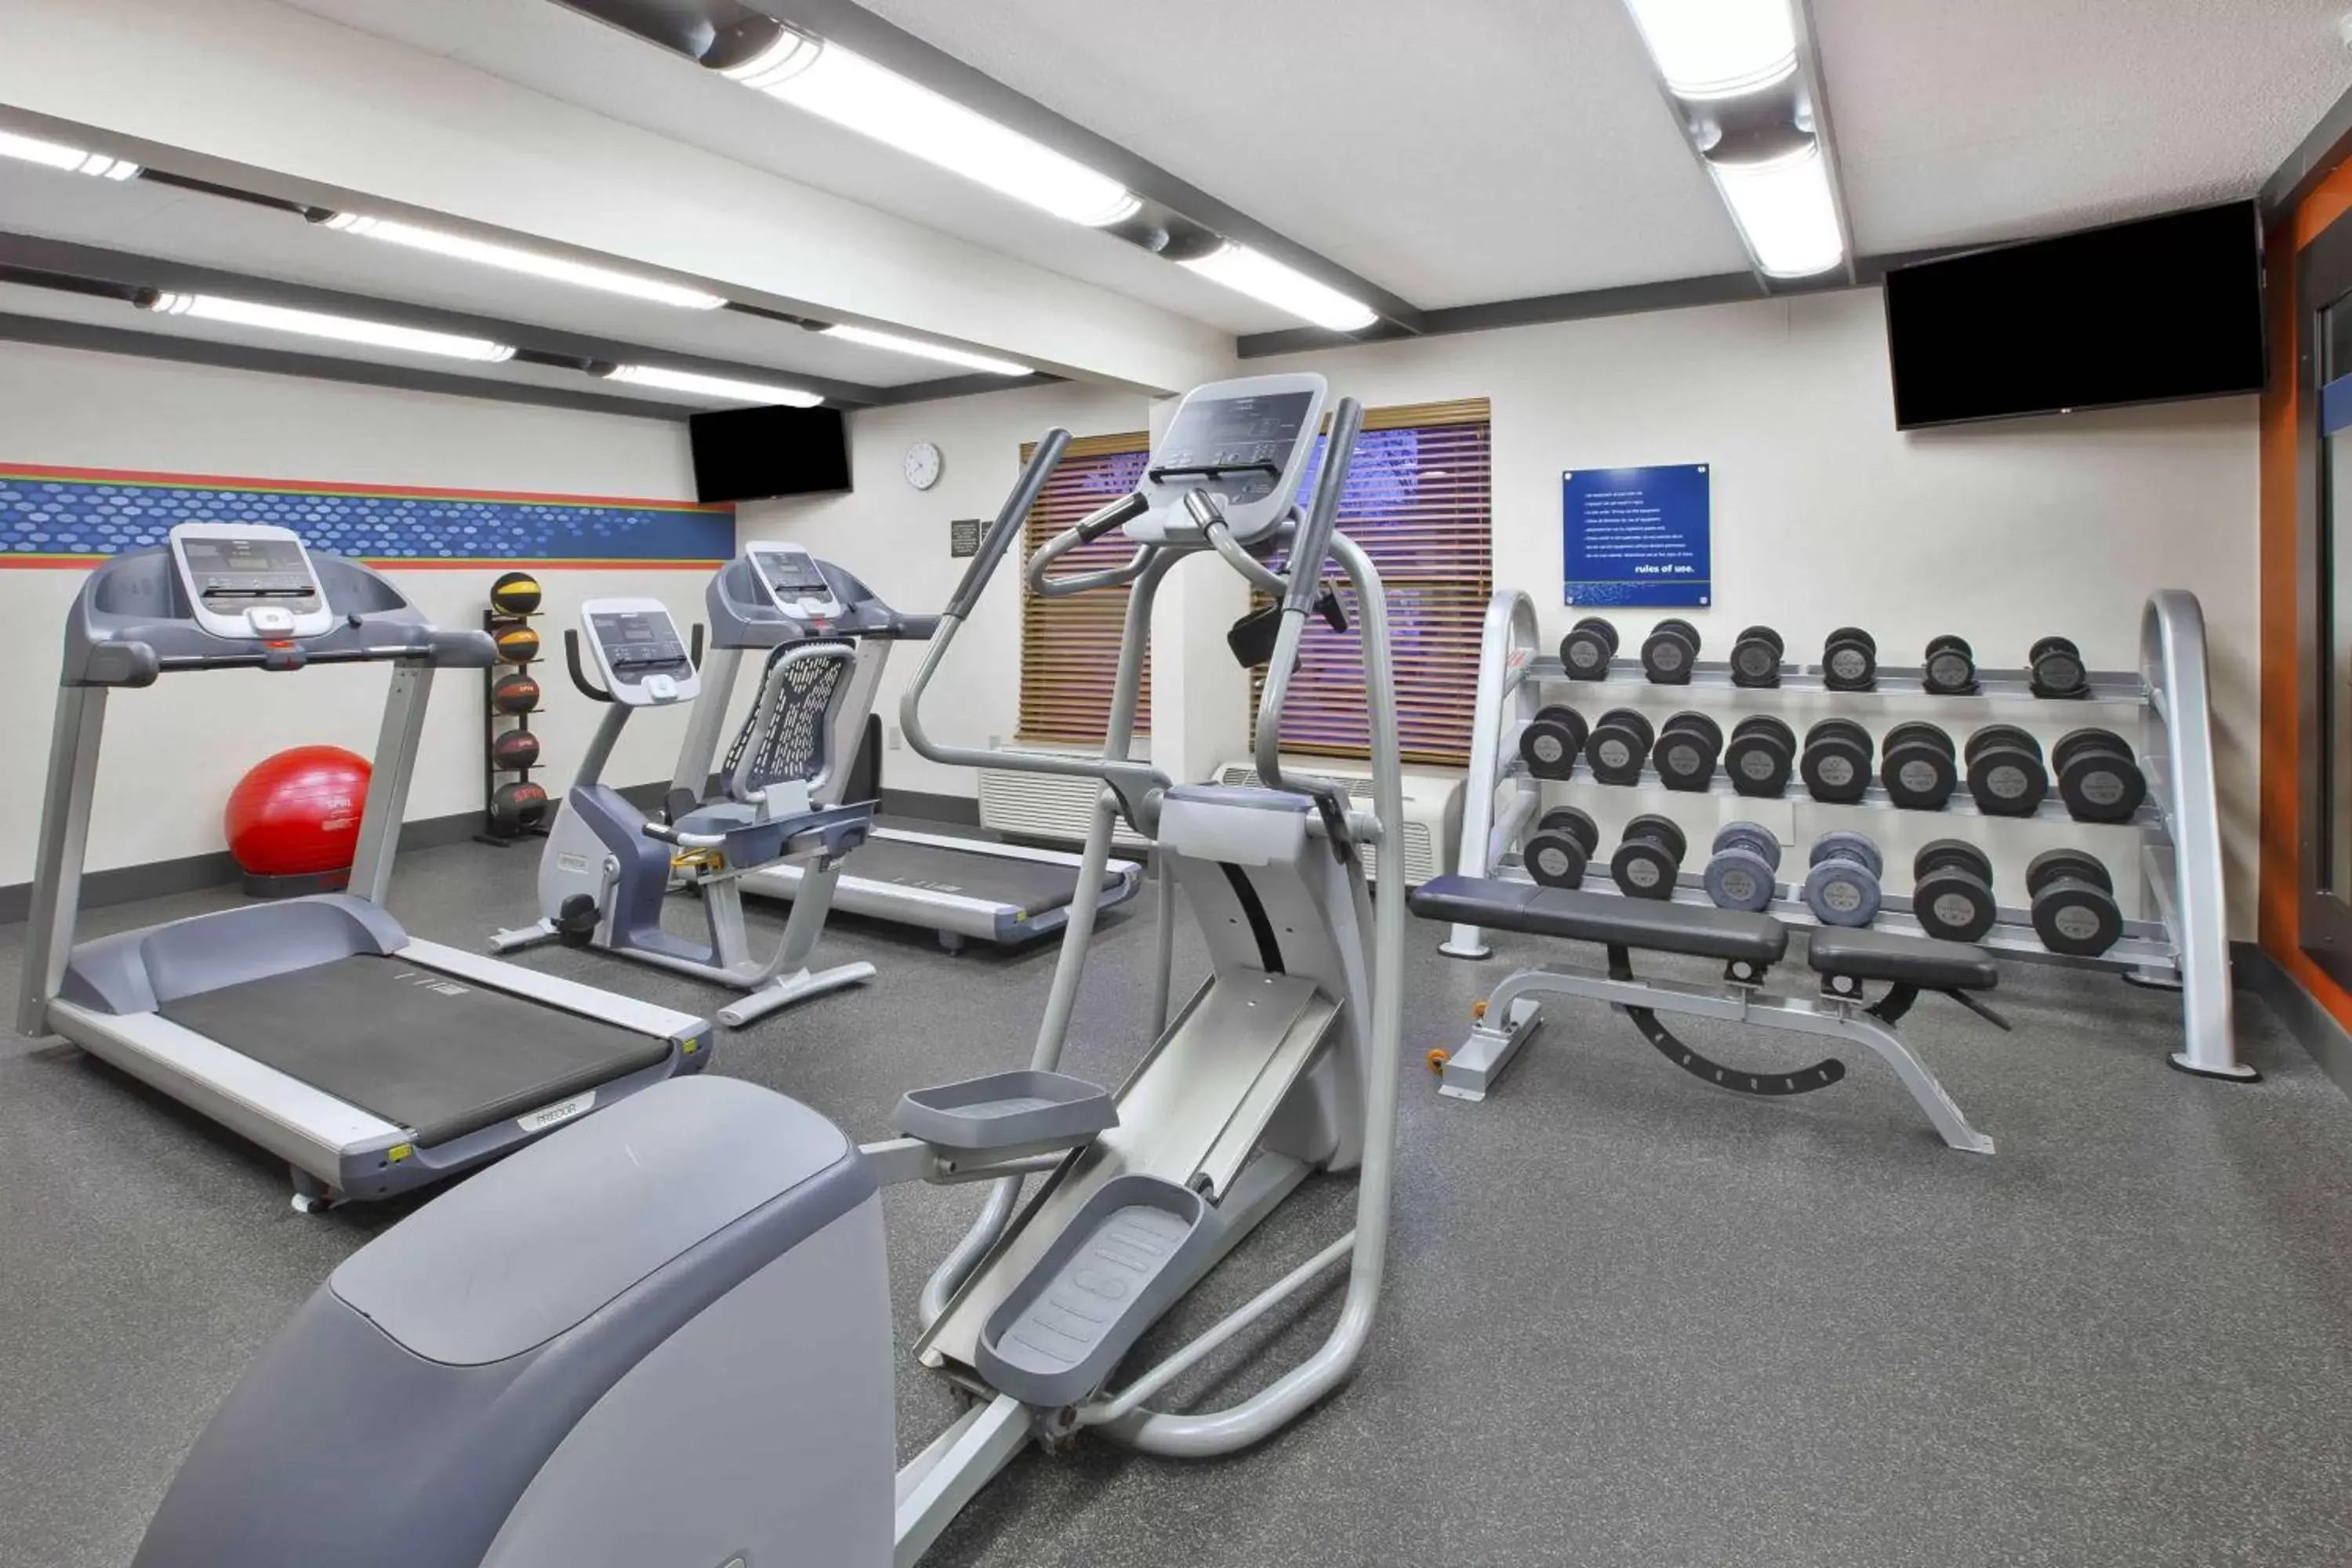 Fitness centre/facilities, Fitness Center/Facilities in Hampton Inn Toledo-South/Maumee